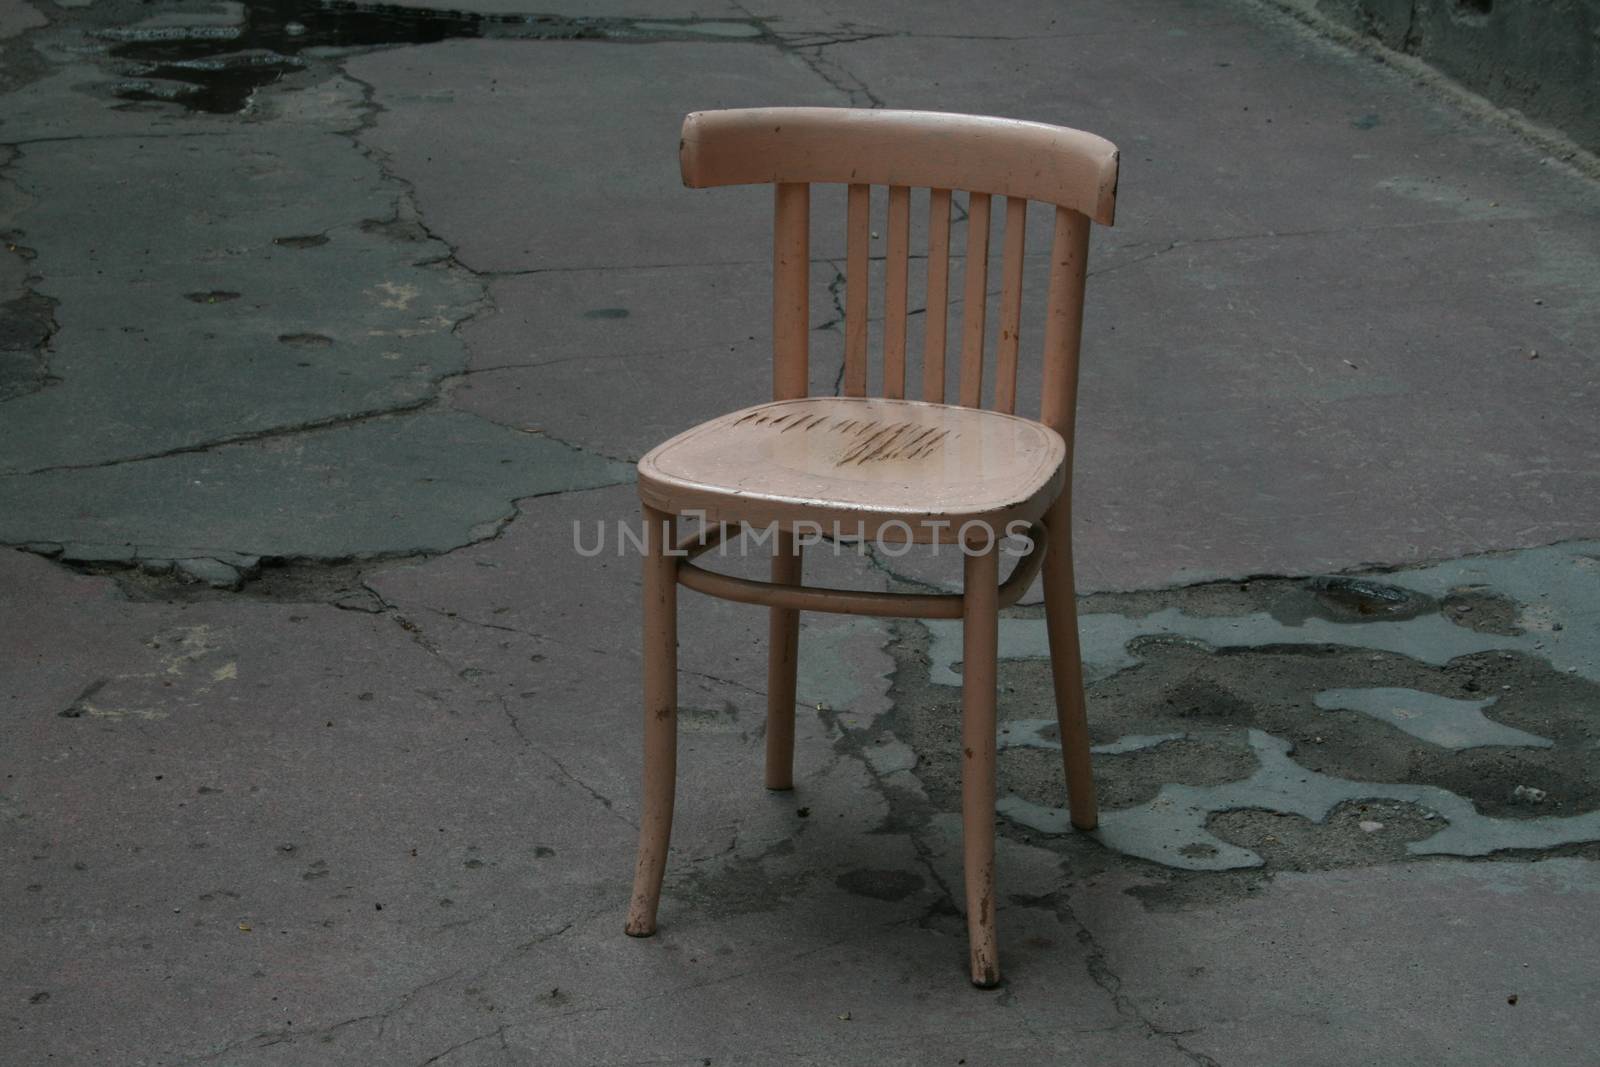 Empty chair symbolizing loneliness by MichalLudwiczak